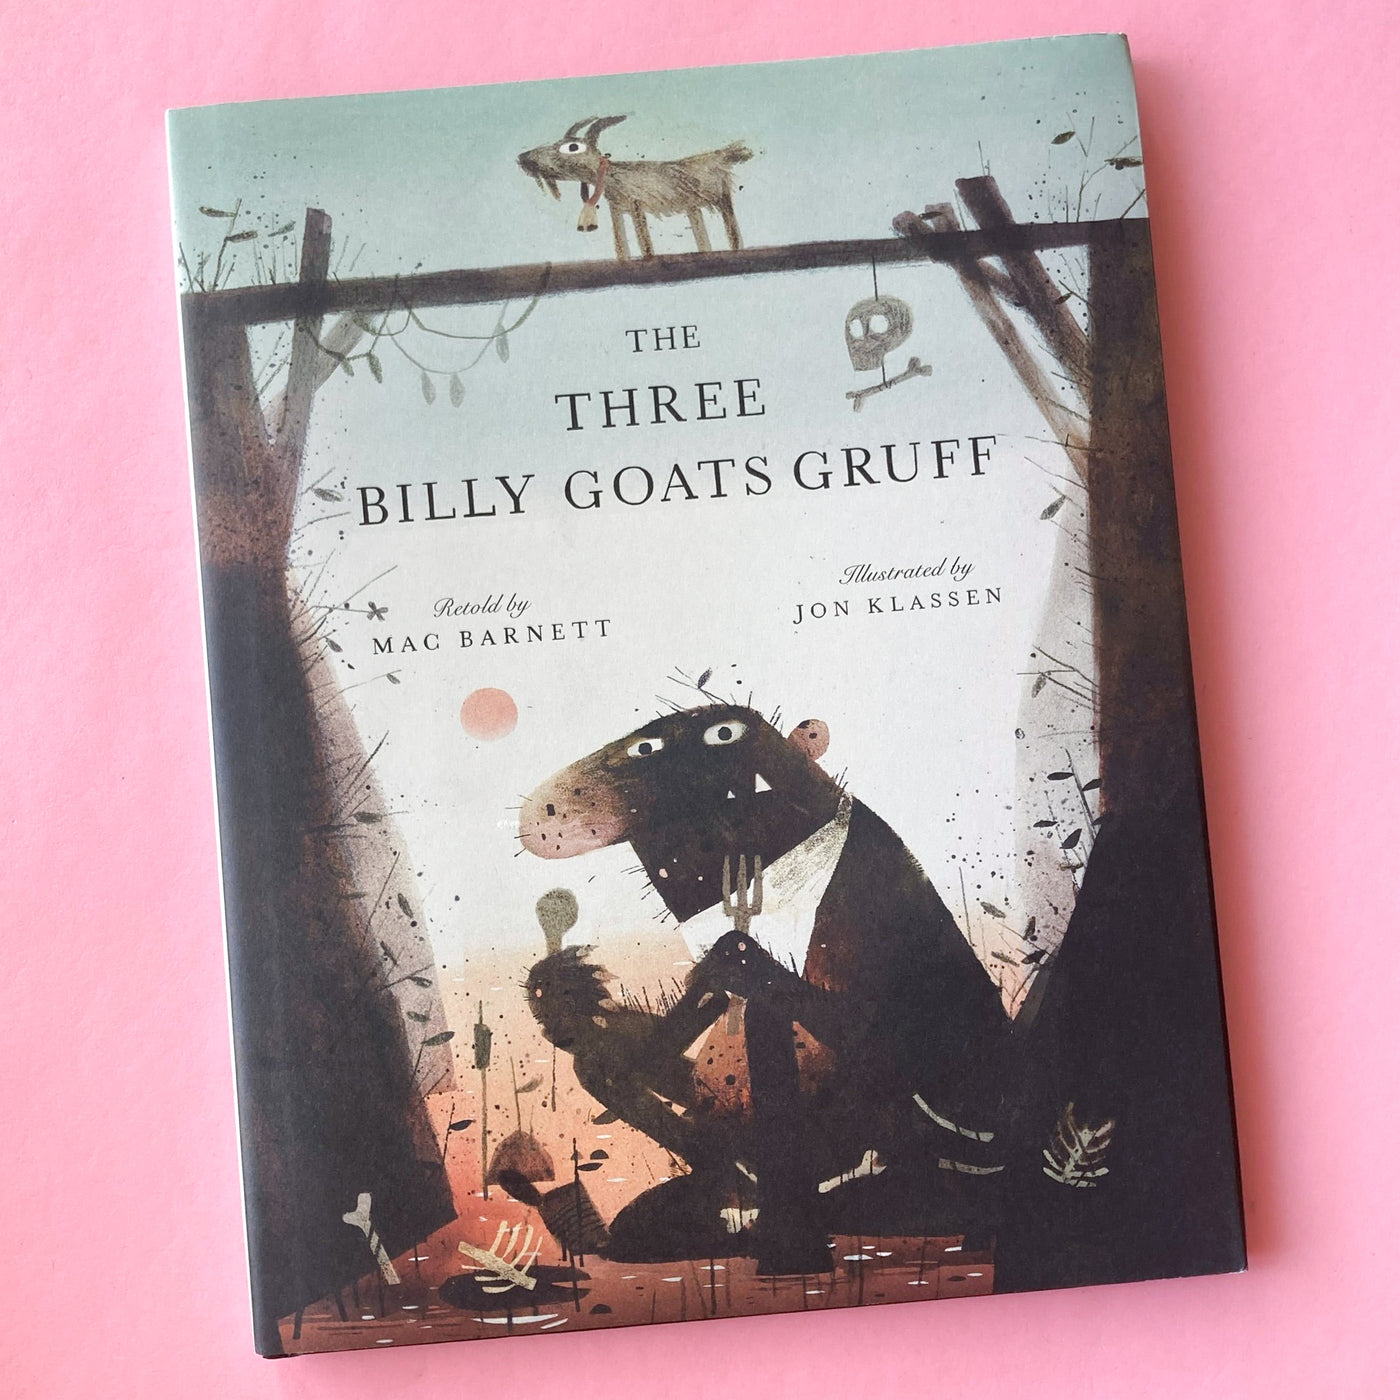 The Three Billy Goats Gruff by Mac Barnett and Jon Klassen